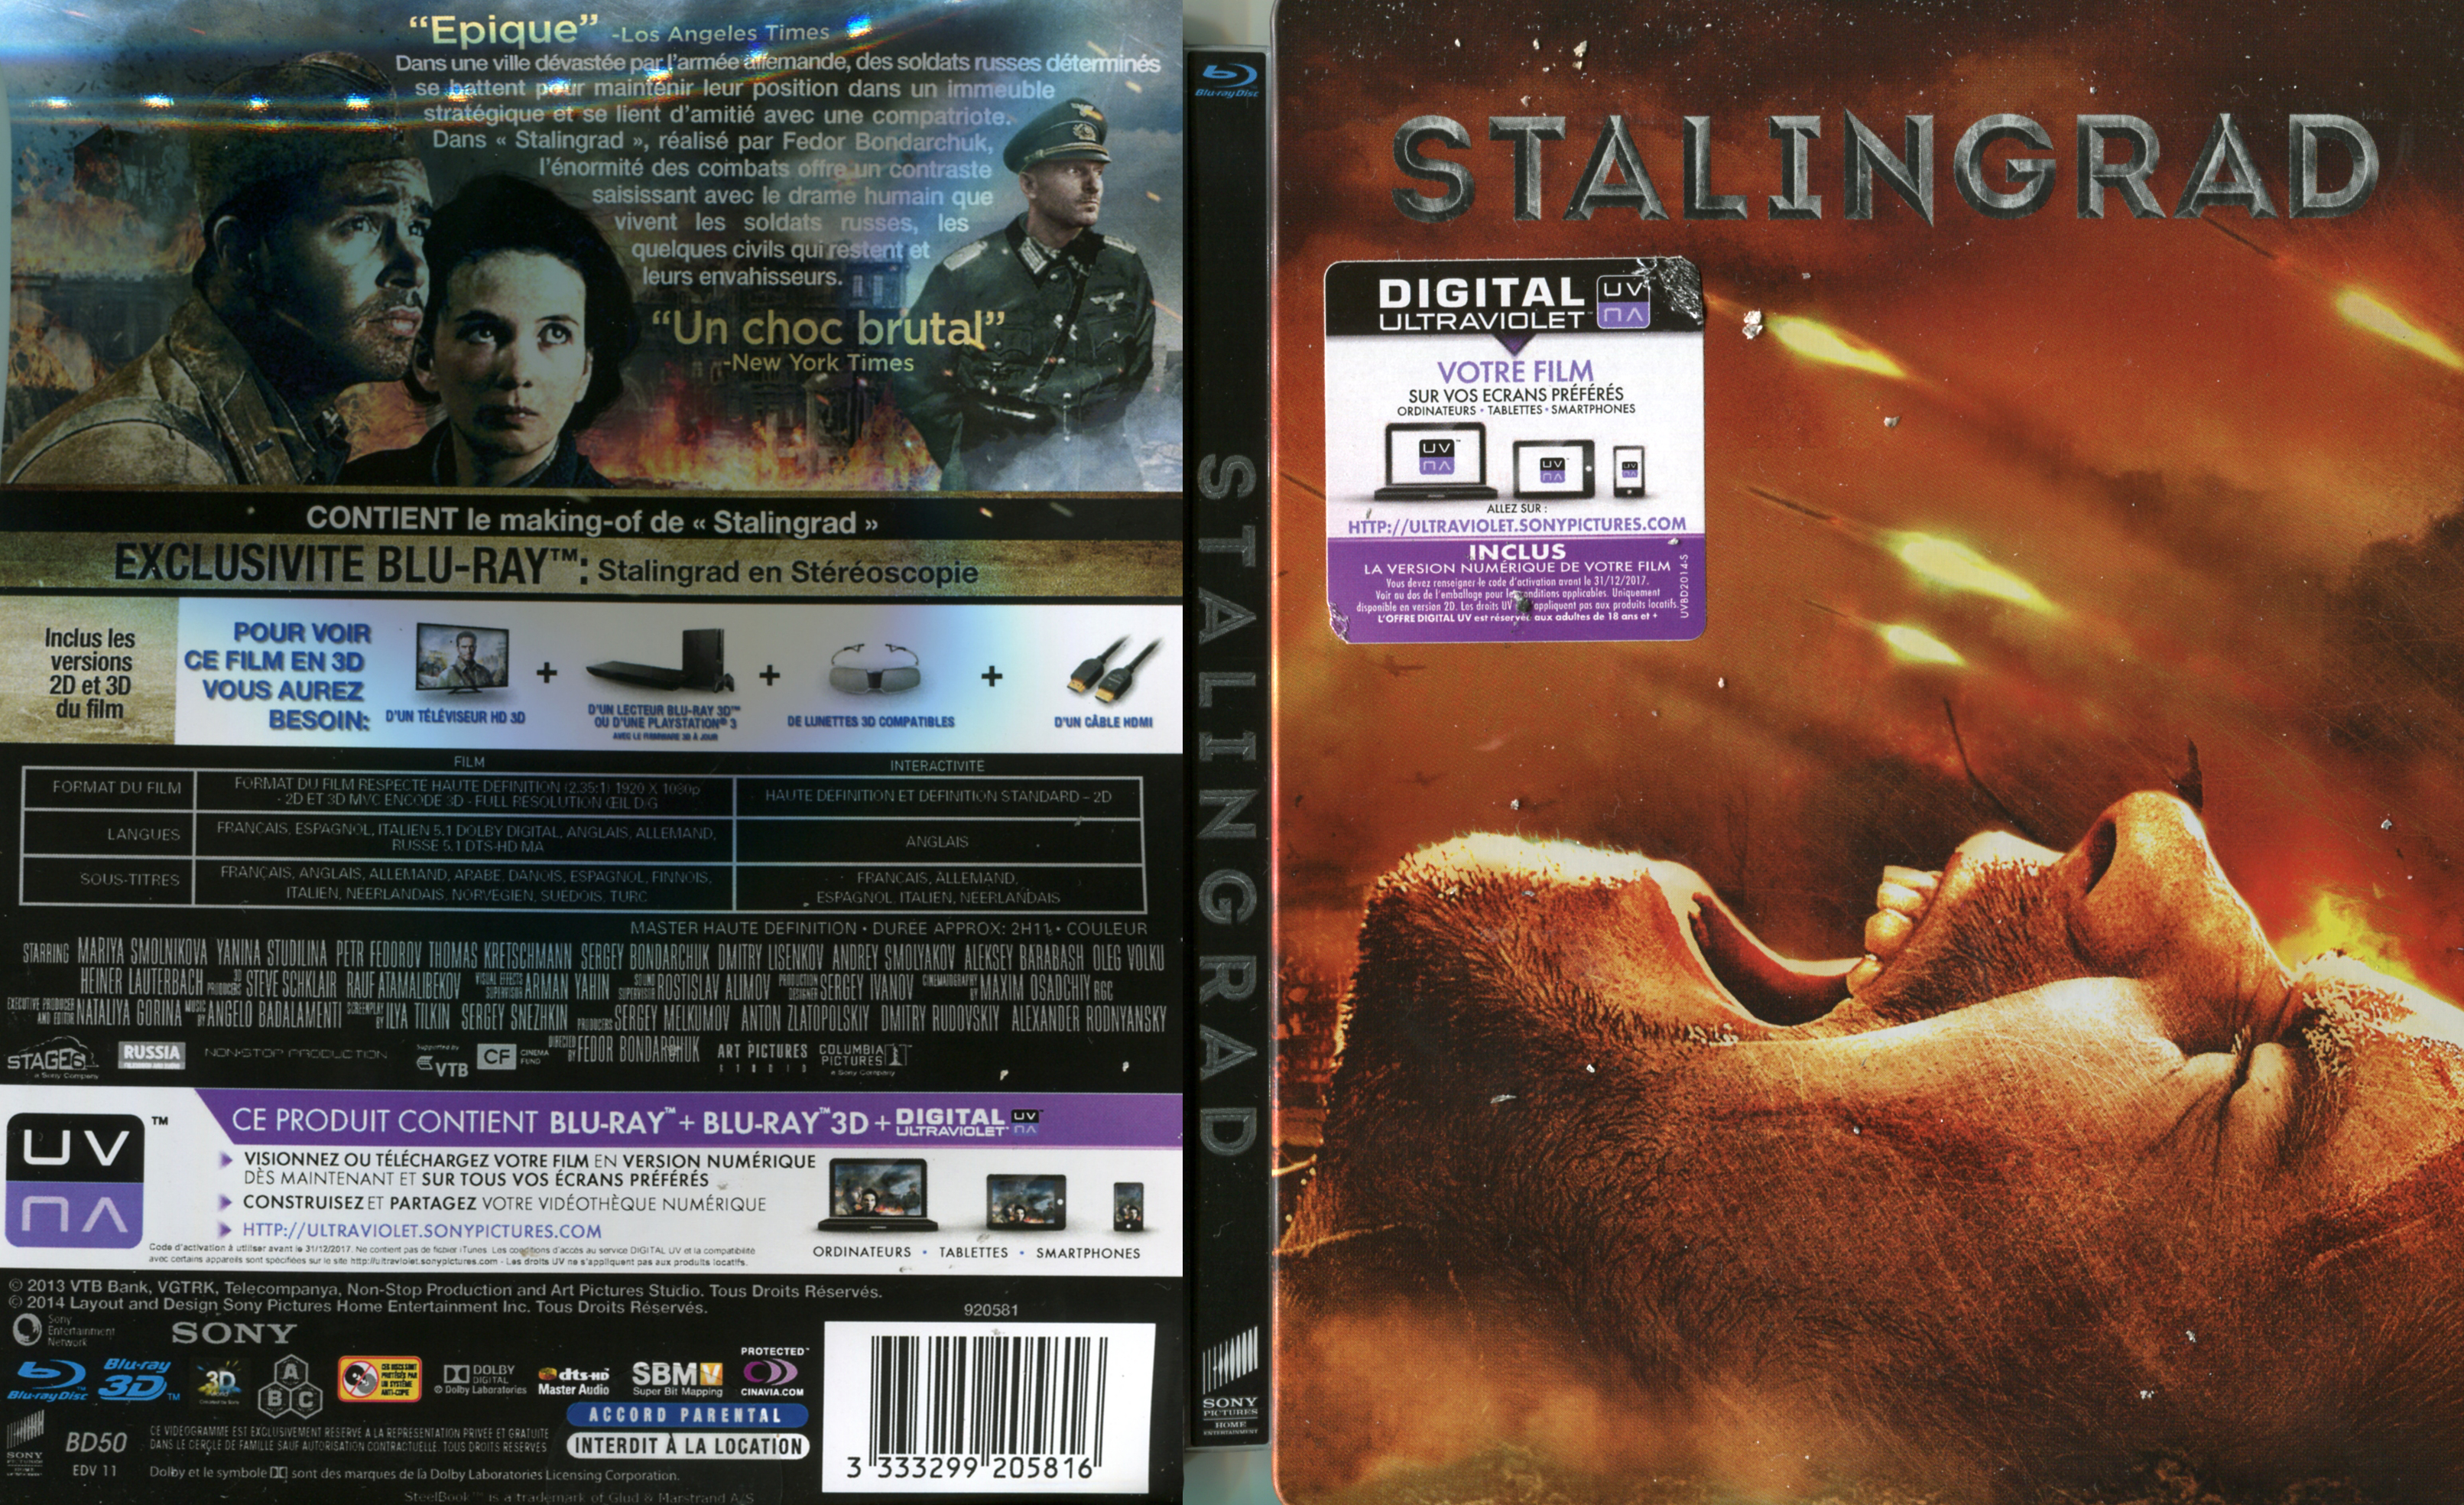 Jaquette DVD Stalingrad (BLU-RAY) v3